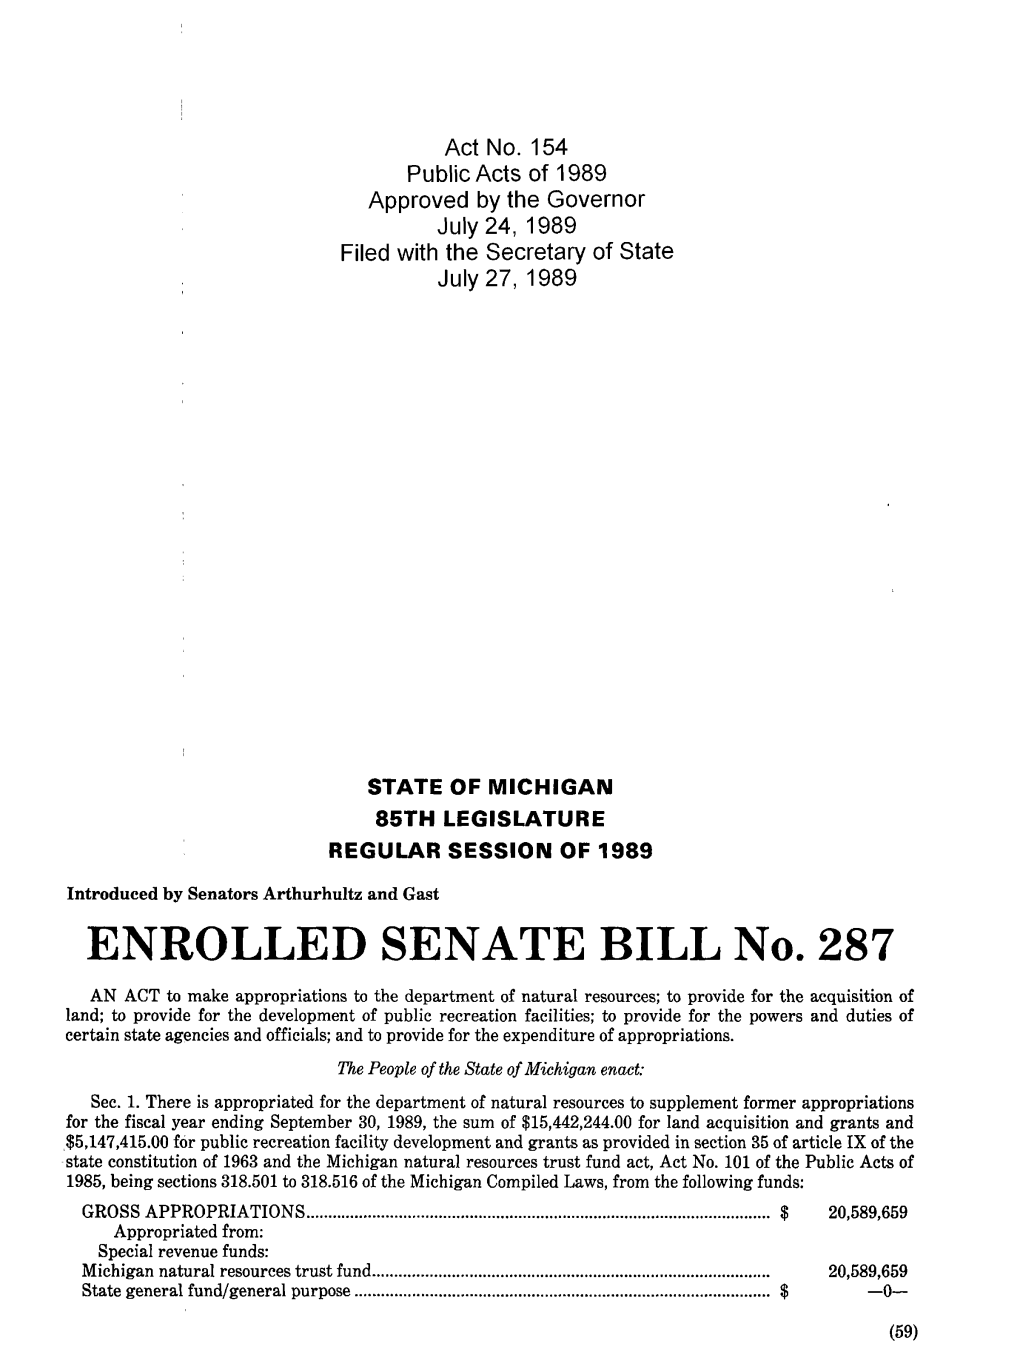 1989 Senate Enrolled Bill